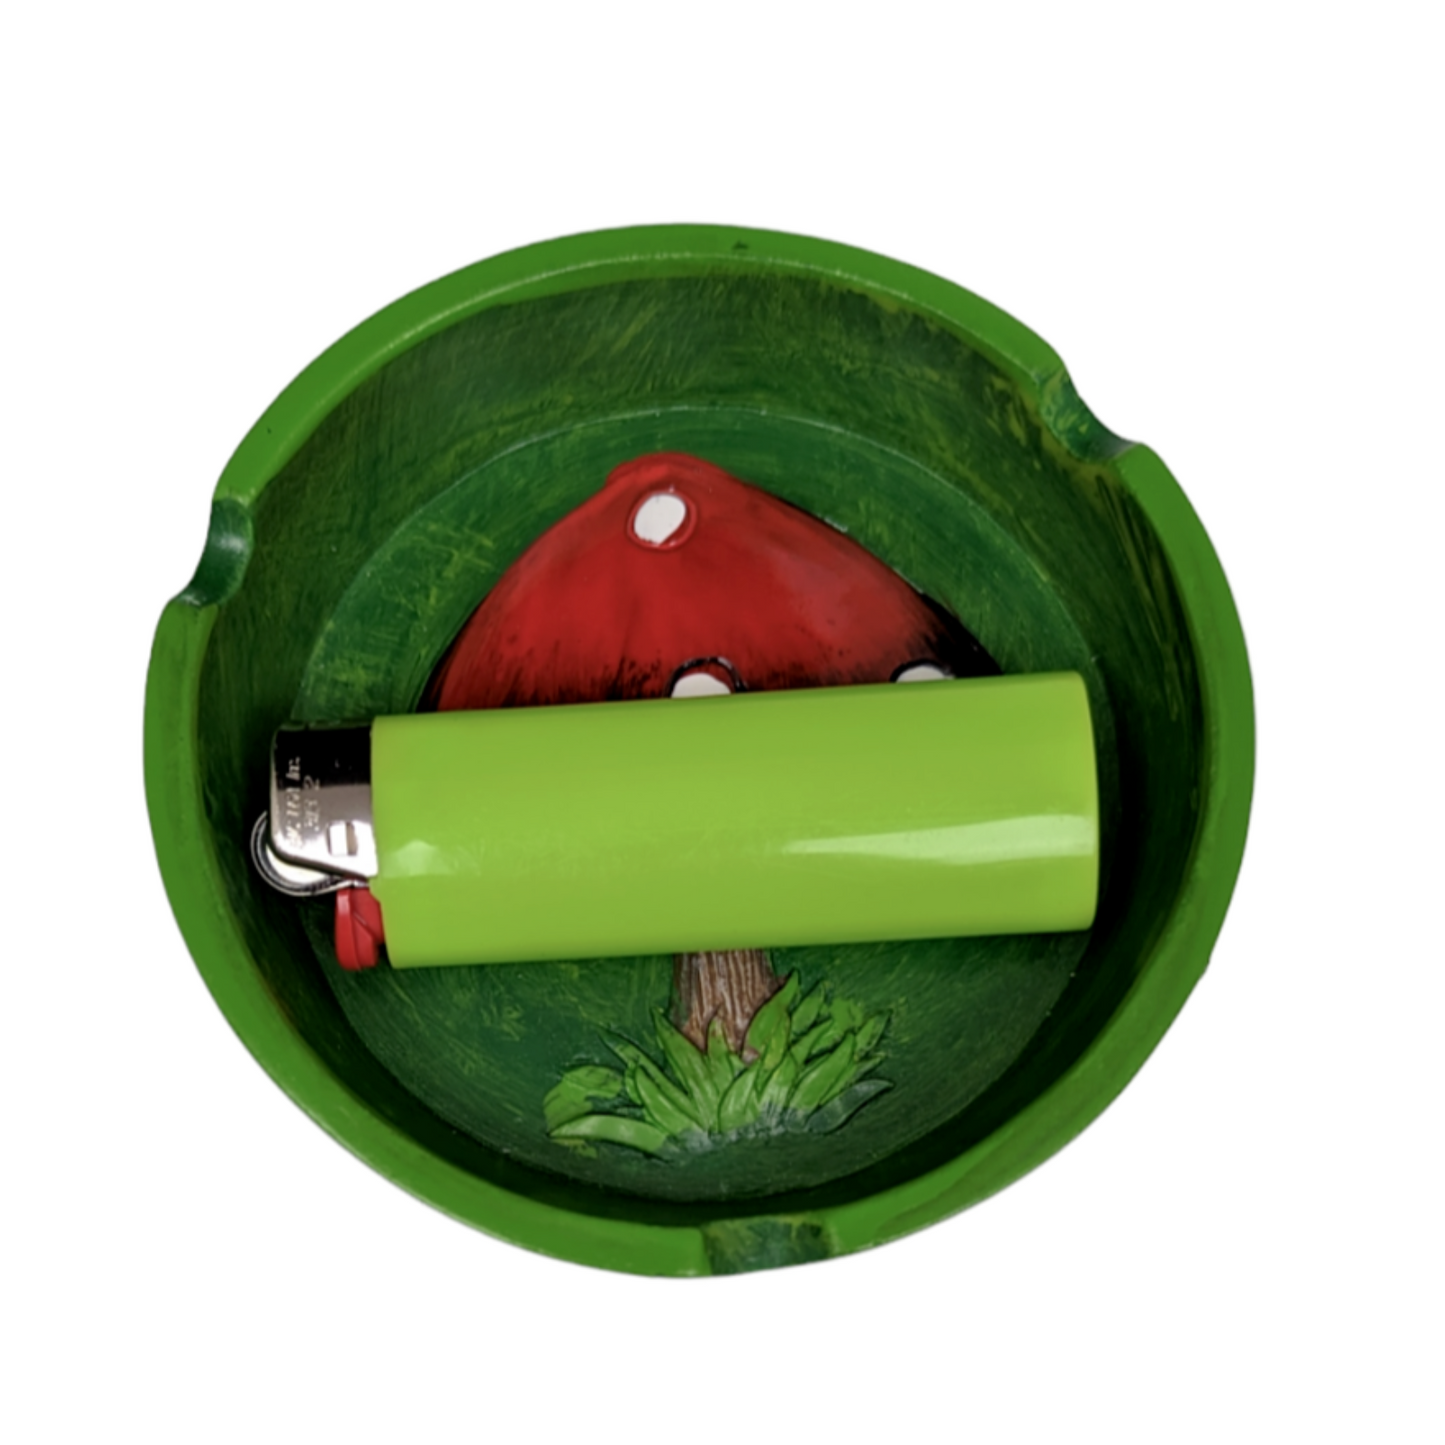 4" Ashtray Green w/Mushroom Design -Perfect Smoking Accessory